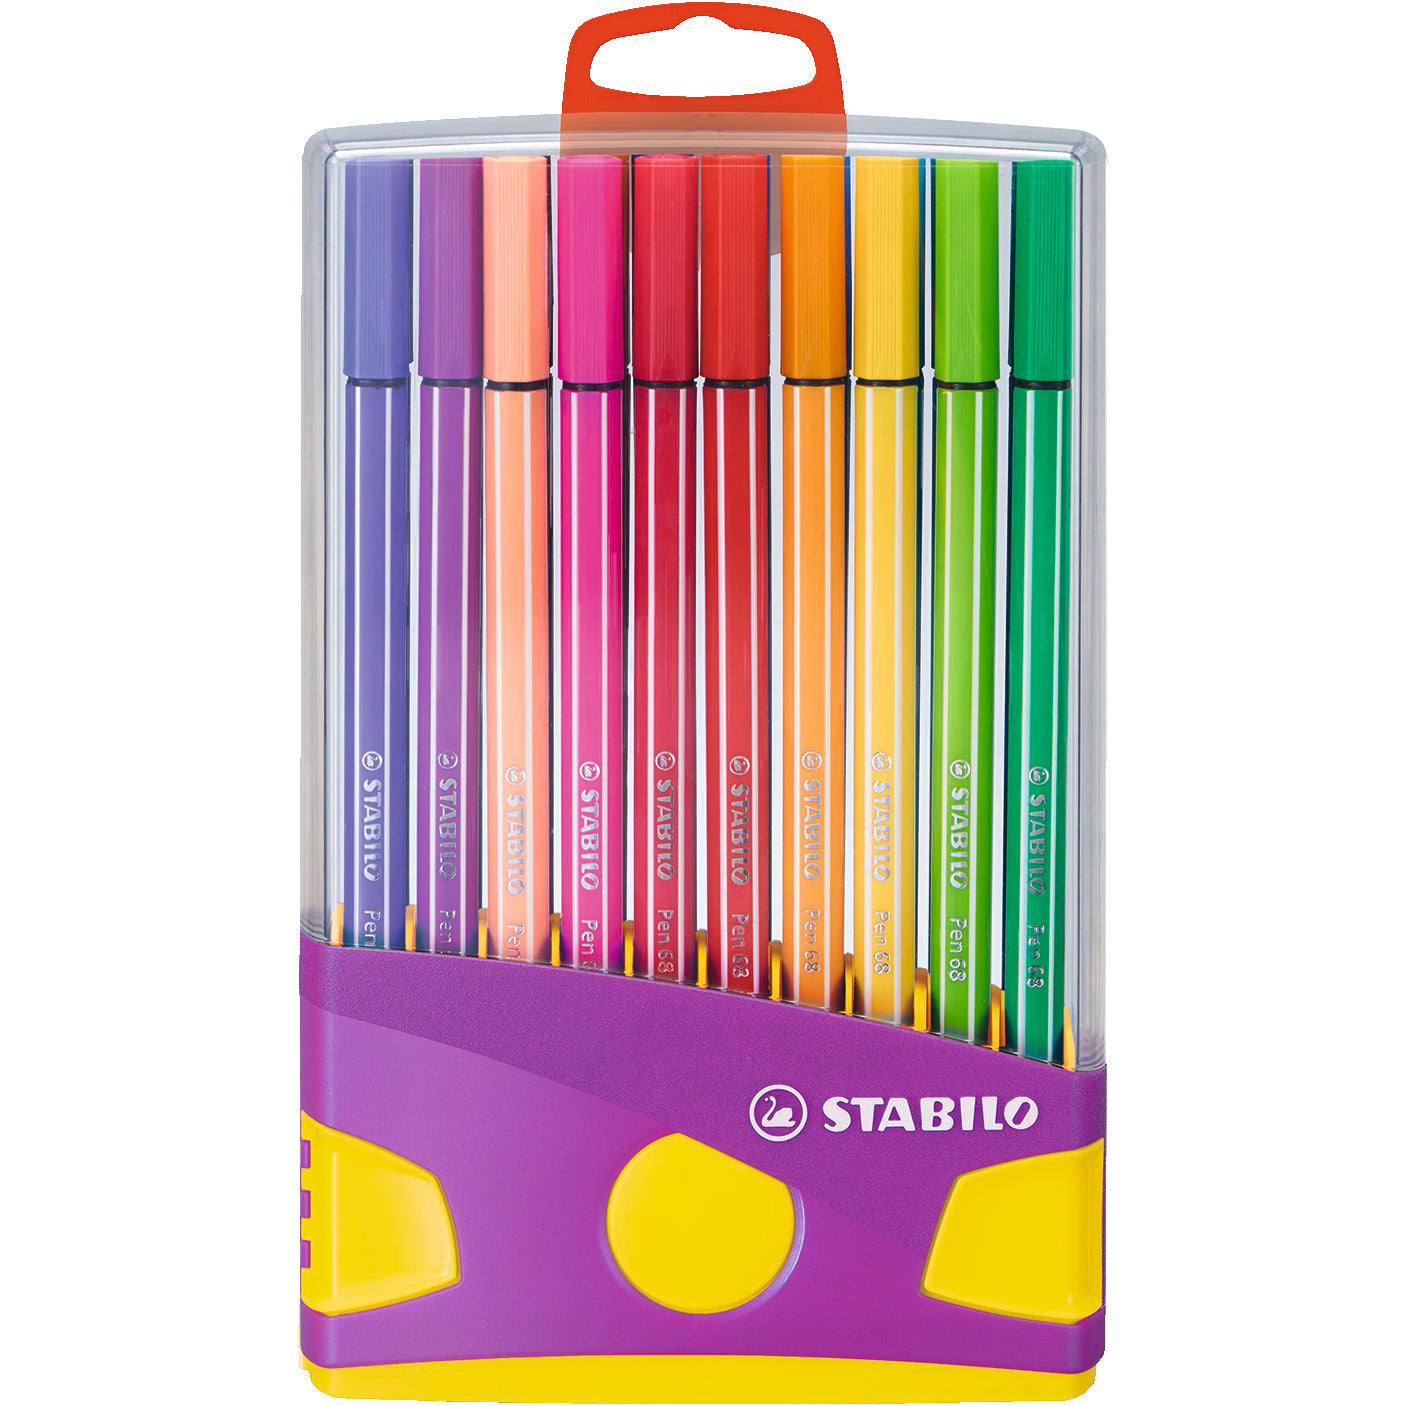  STABILO Pen 68 Dark red Pack of 10 - Premium Felt-tip Pen :  Arts, Crafts & Sewing